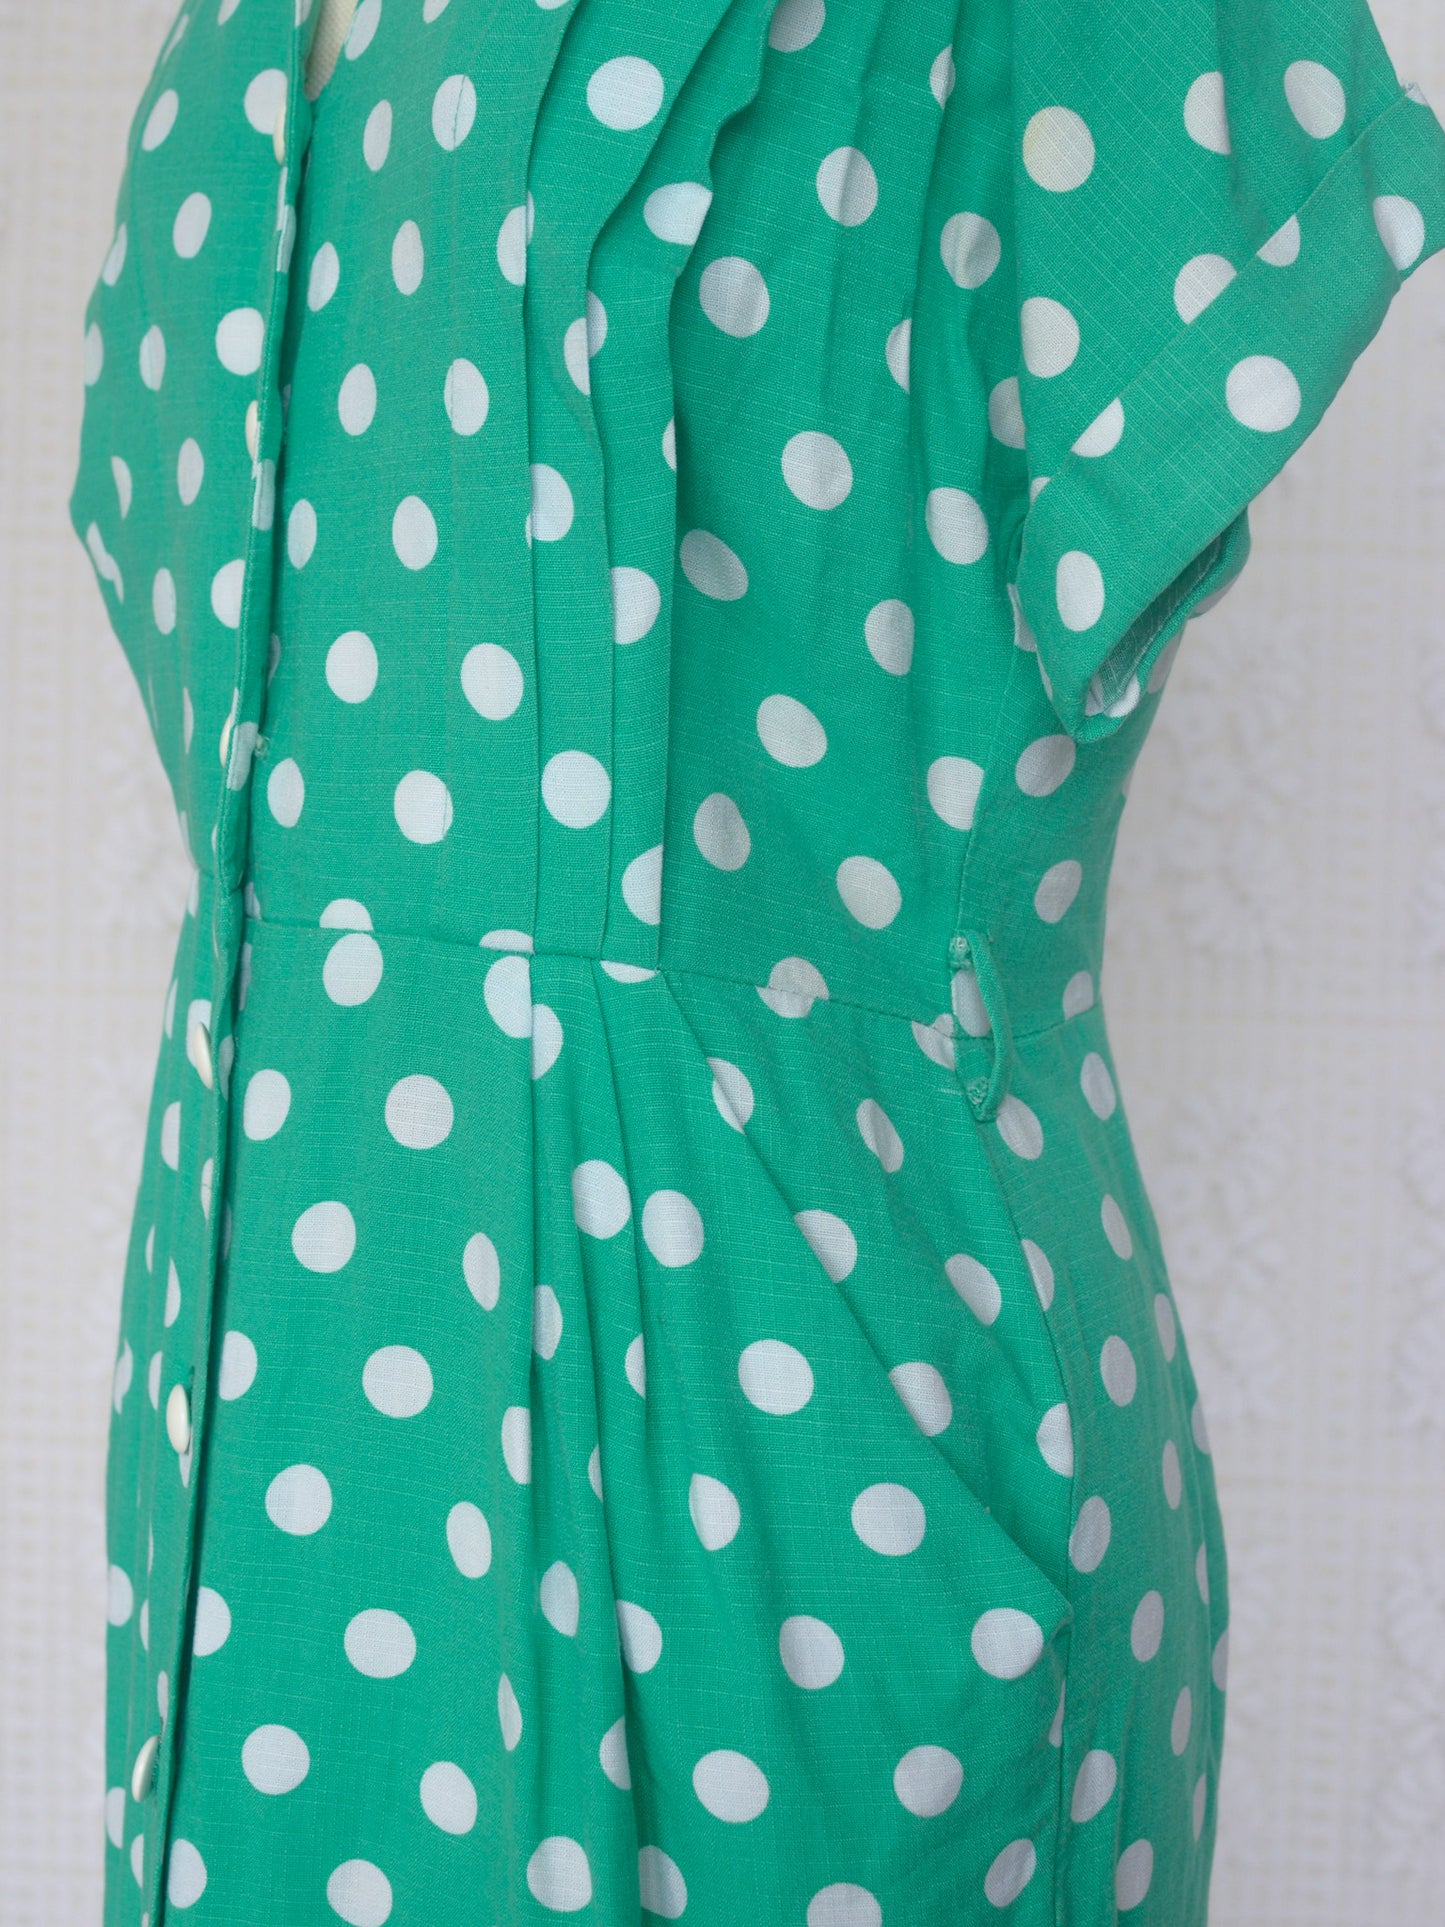 1980s green and white polkadot short sleeve wiggle dress